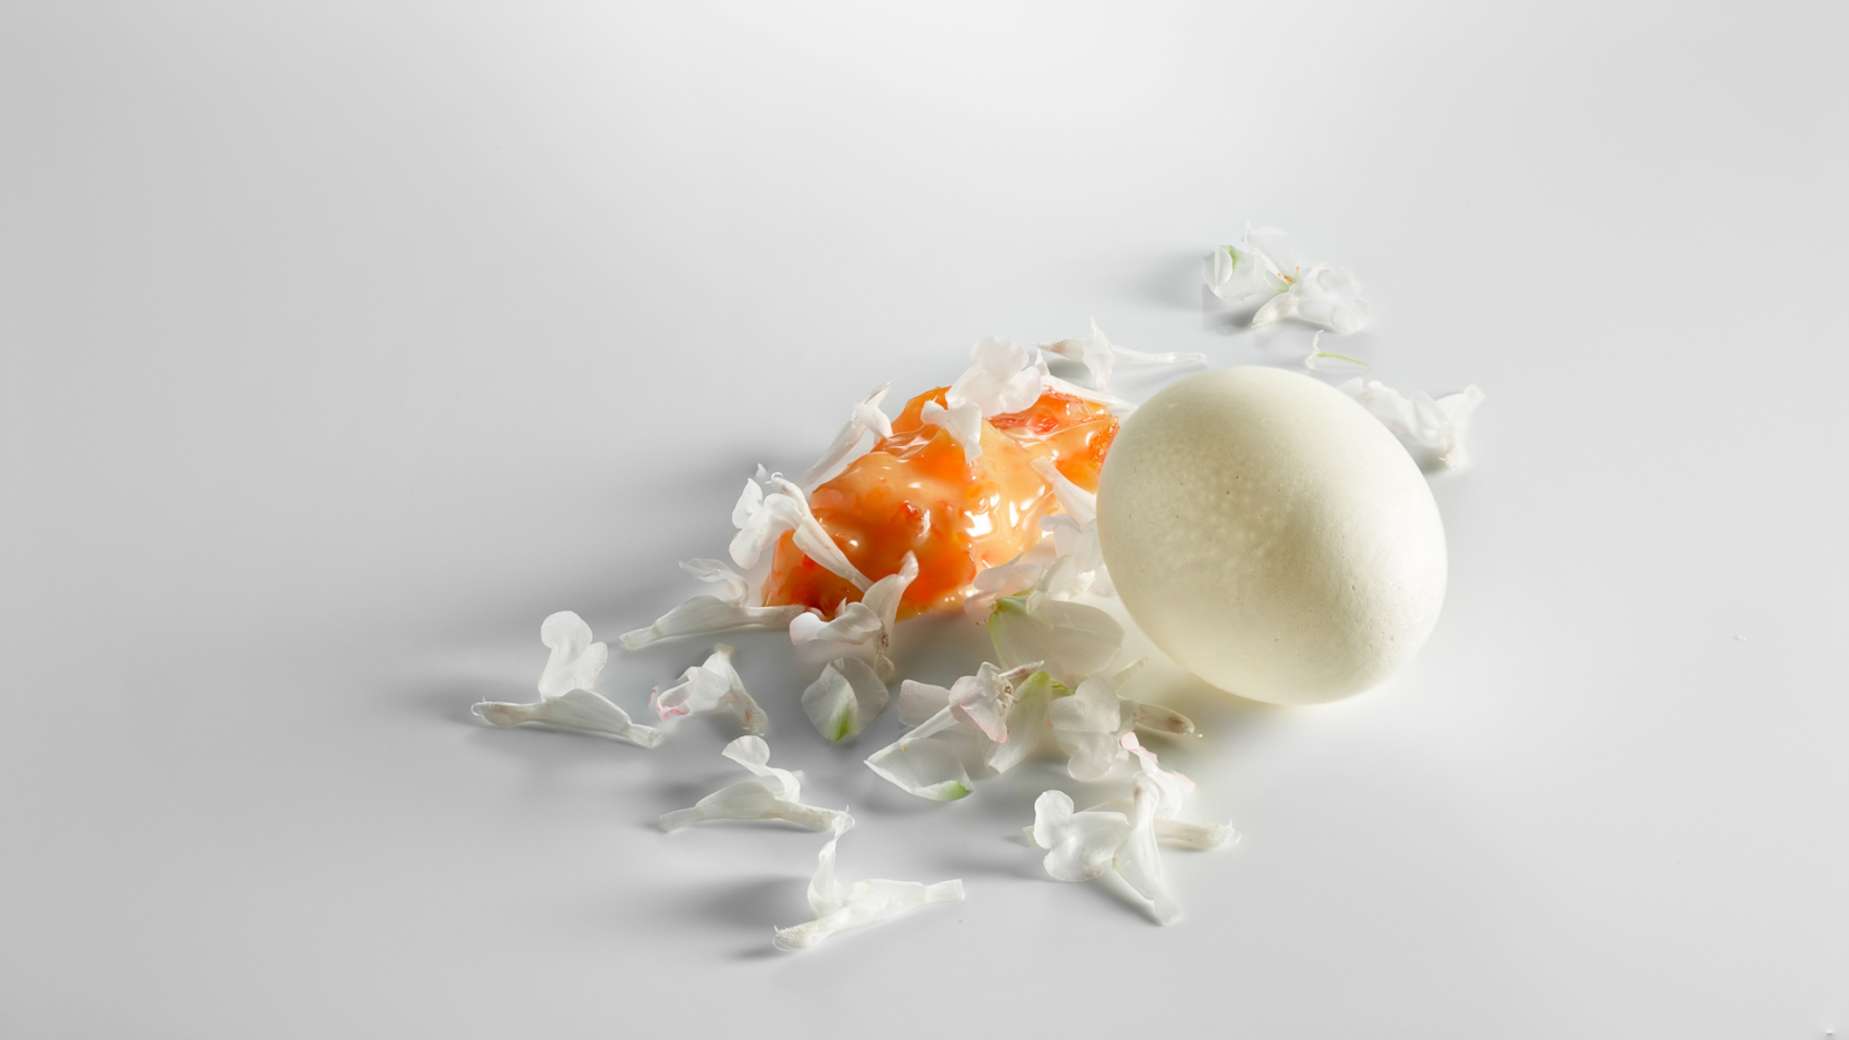 The broken egg, the cool yolk, and the white flowers.
Photo: José Luis López de Zubiria / Mugaritz